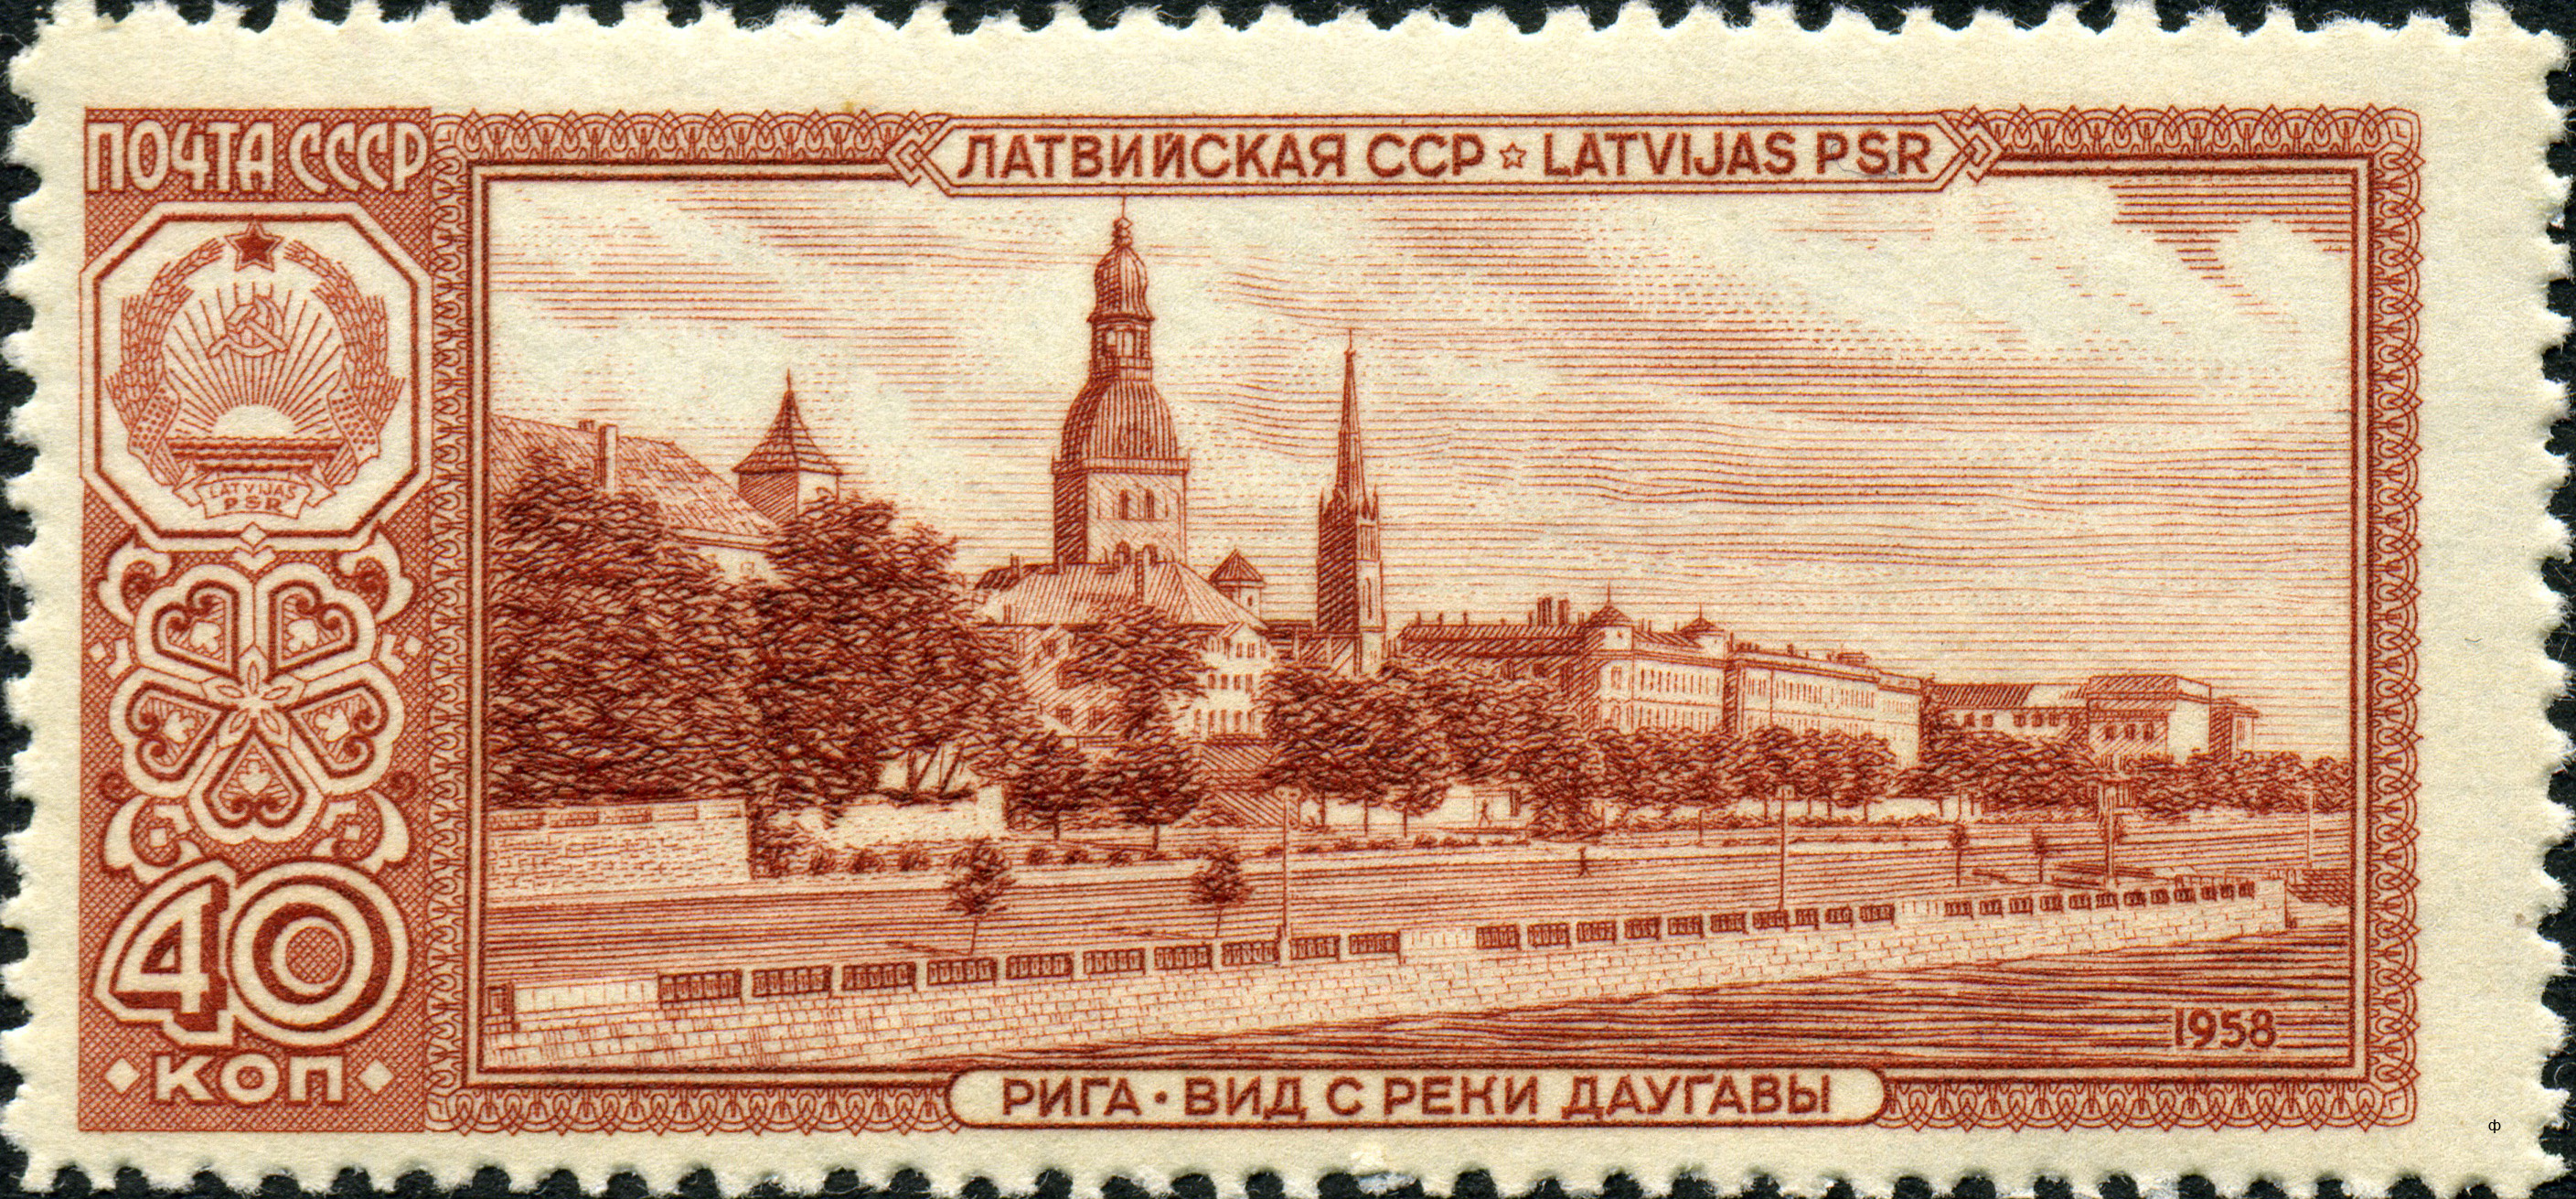 Riga 1958 40kop USSR